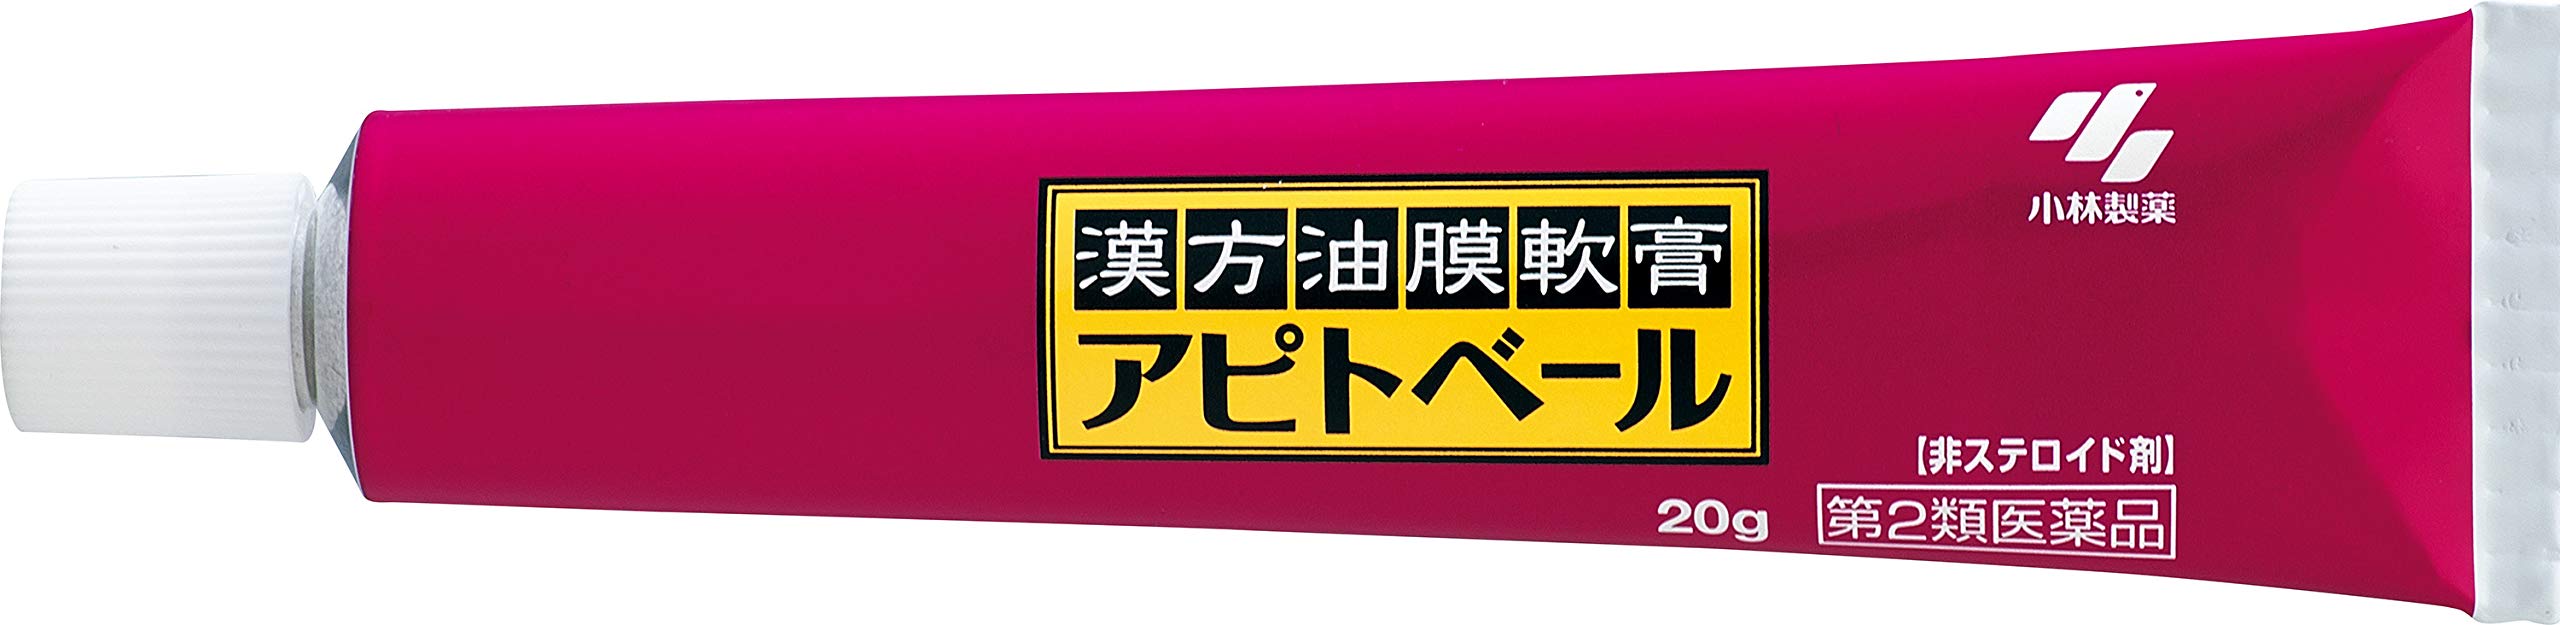 Apitvale Apitoberu 20G - 2 种日本药品